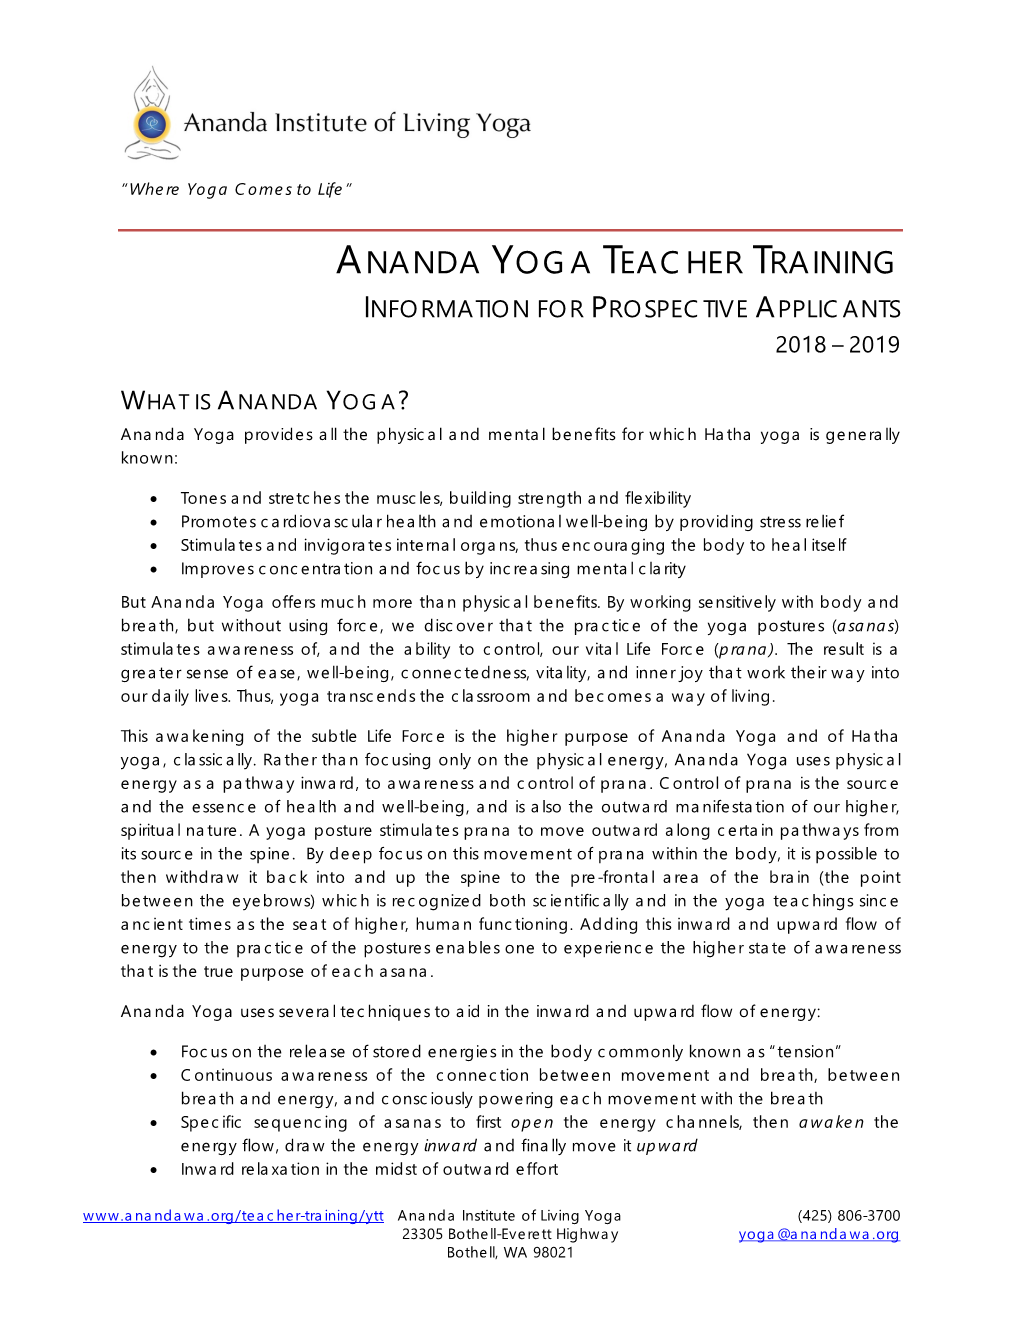 Ananda Yoga Teacher Training Information for Prospective Applicants 2018 – 2019